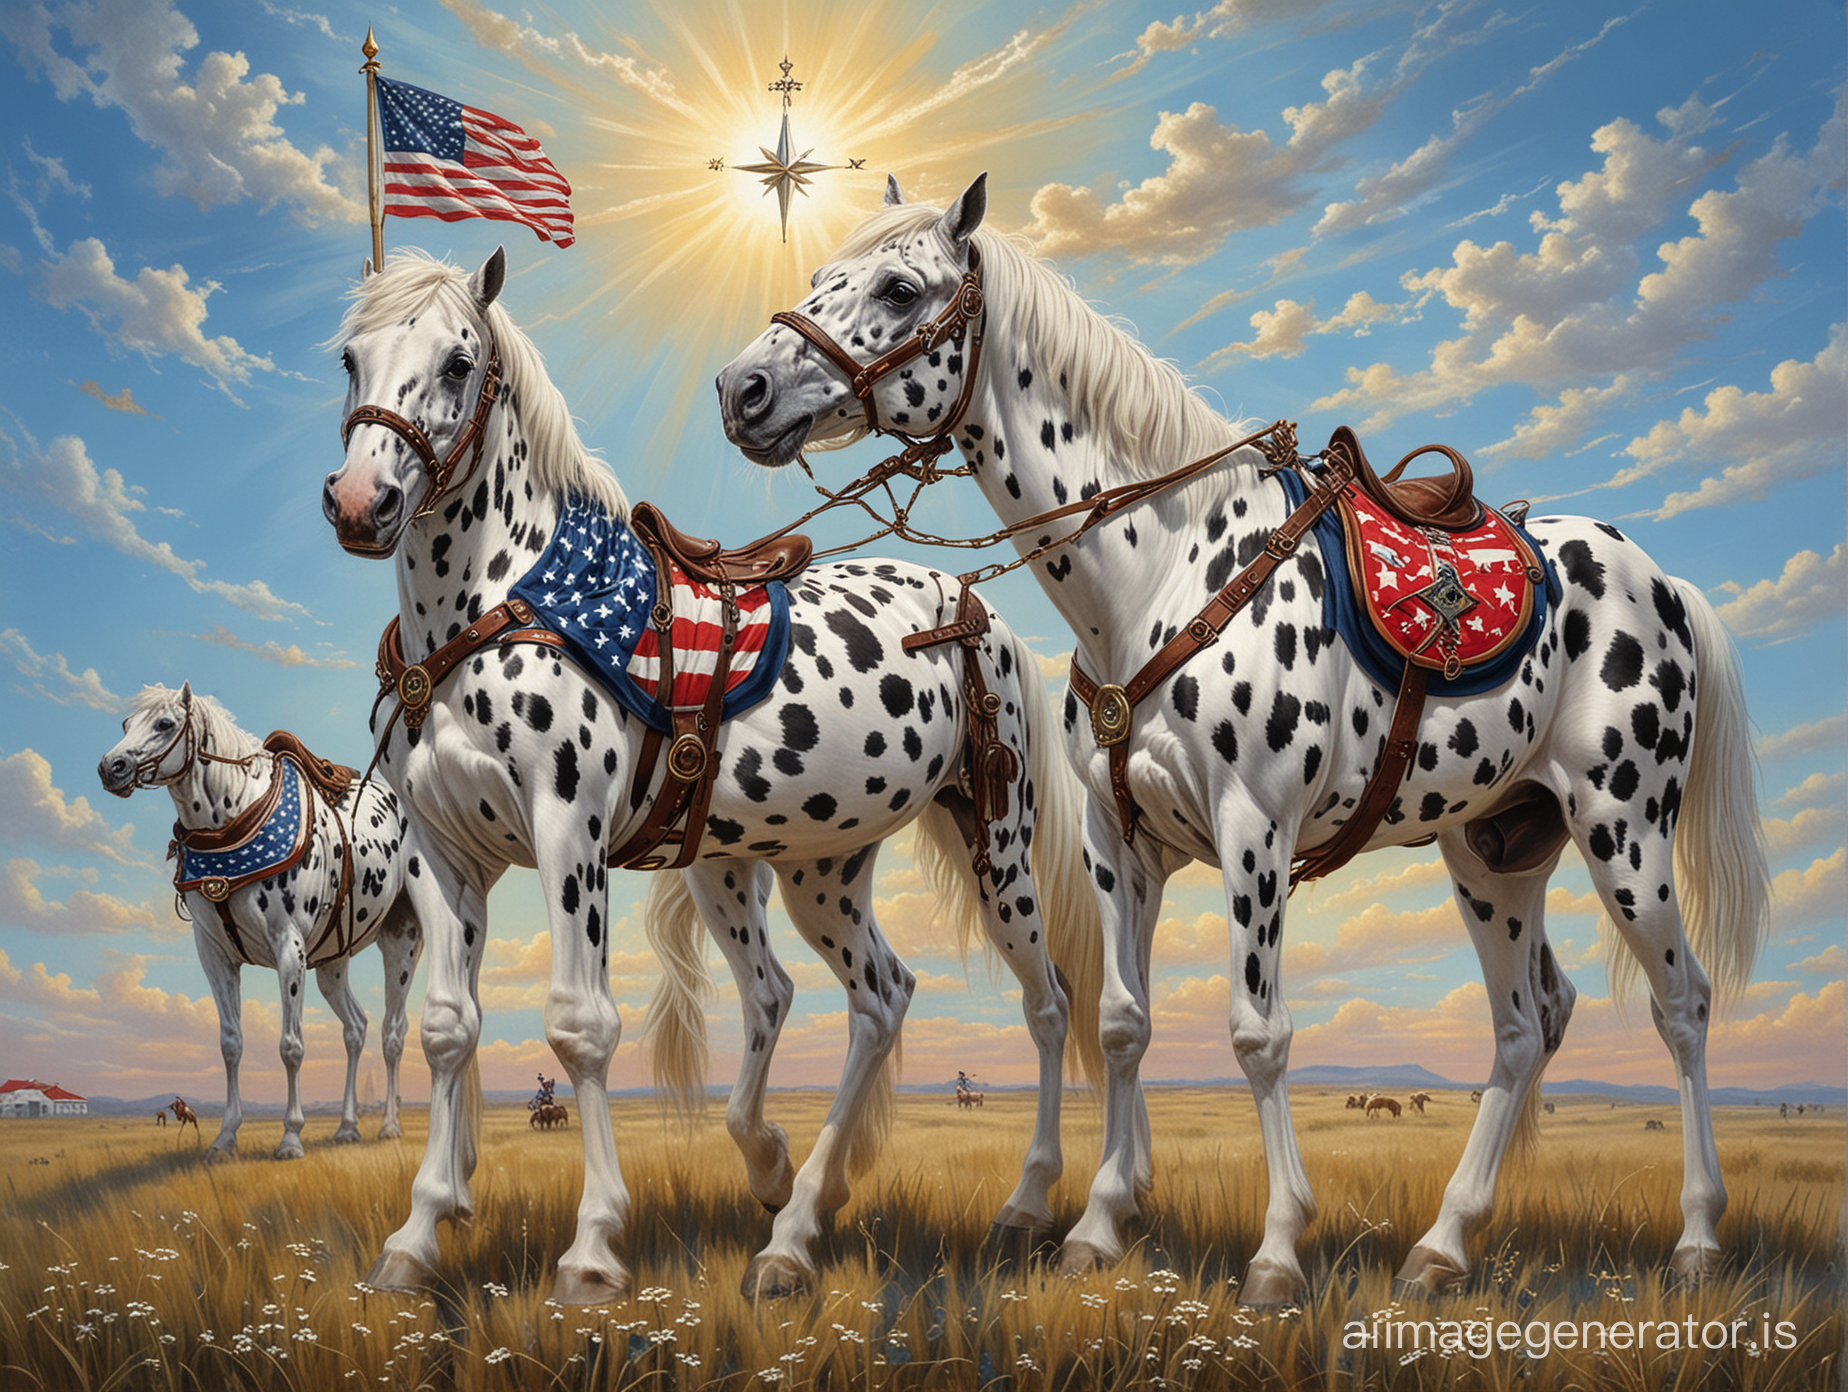 dalmatian knabstrupper horses with Star-Spangled Banner  compass sun blue sky
